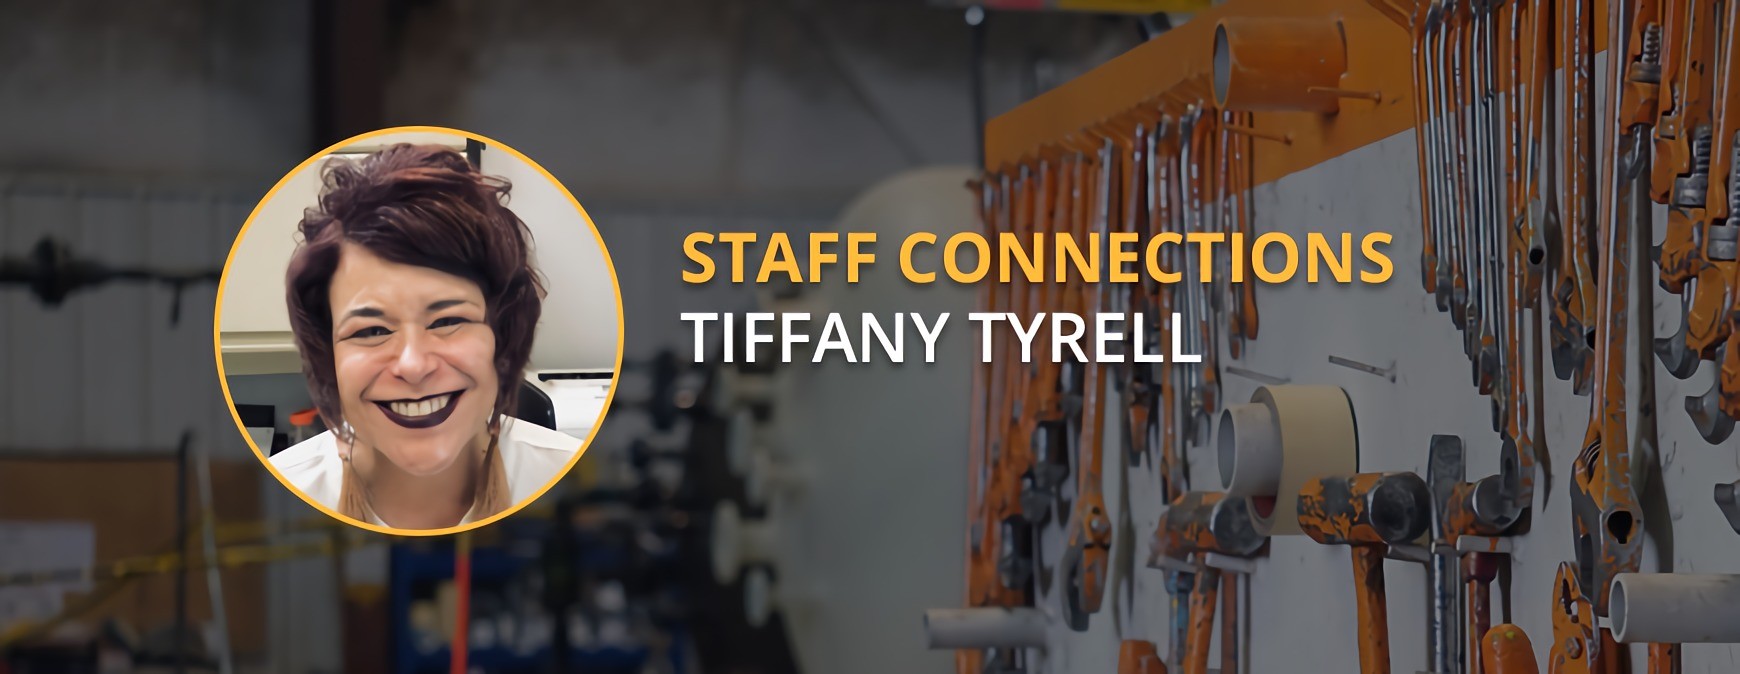 Tiffany Tyrrell staff connection